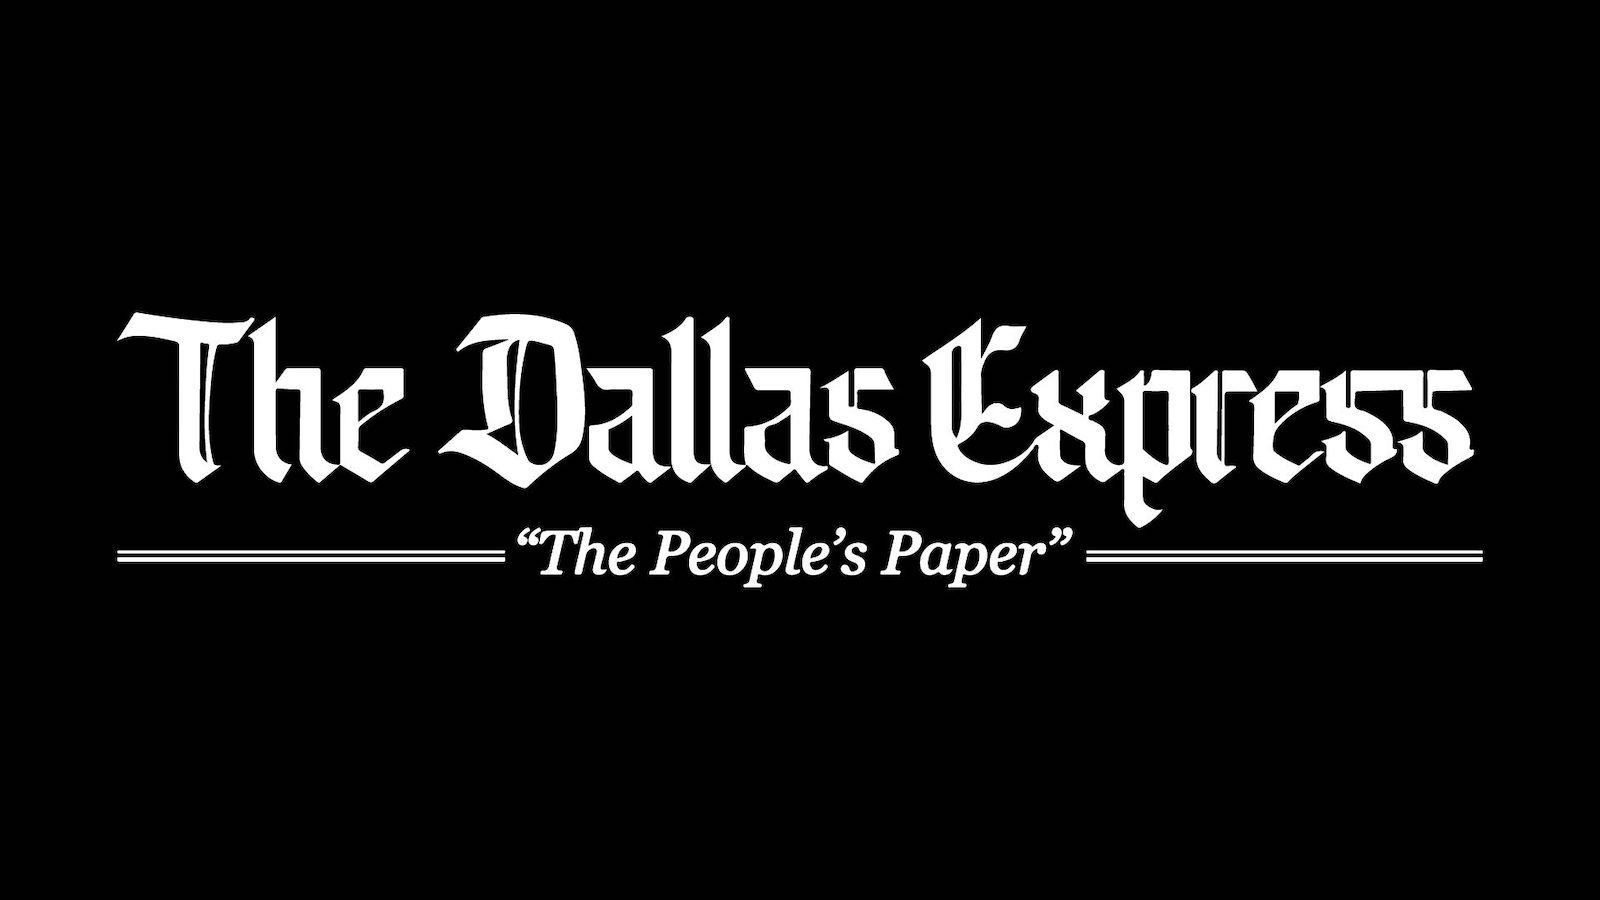 Dallas Express